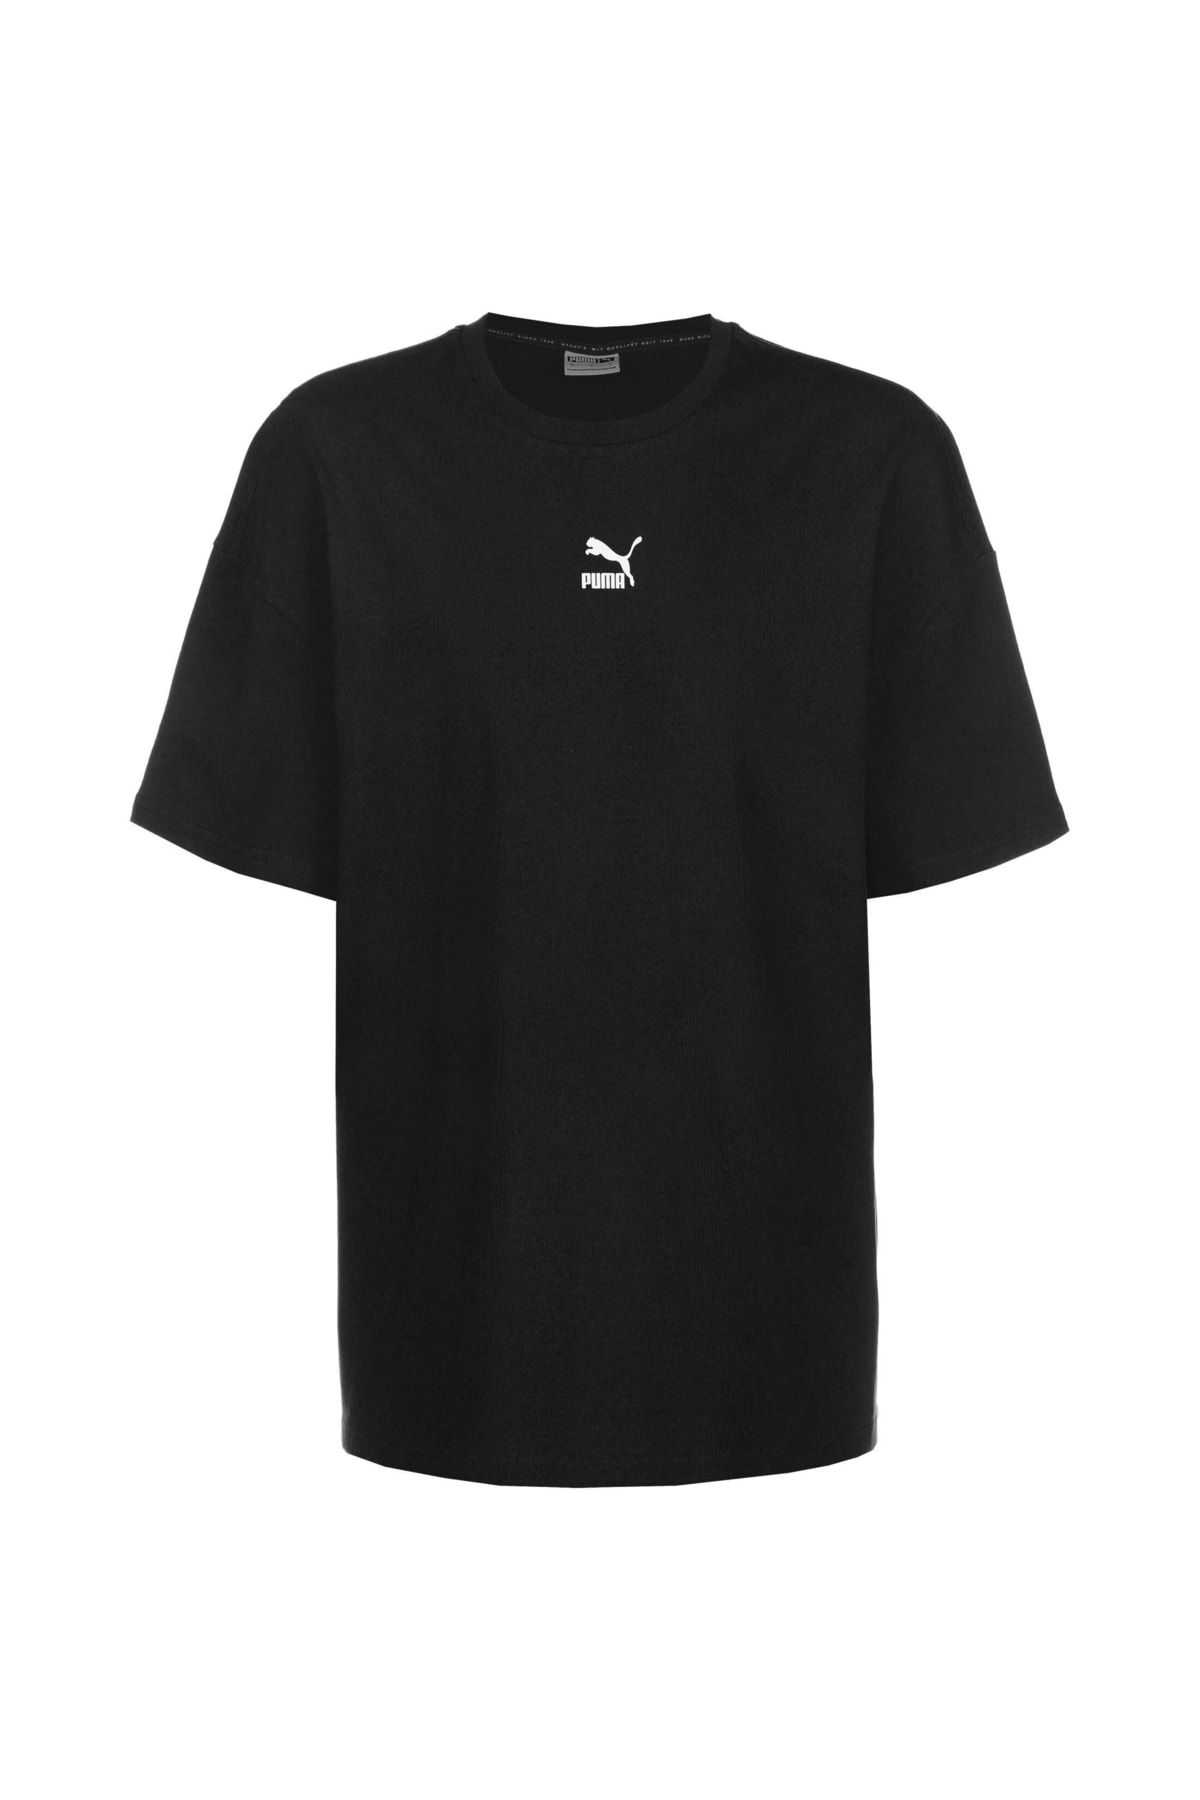 Puma T-Shirt Fit Trendyol - - Schwarz Regular 